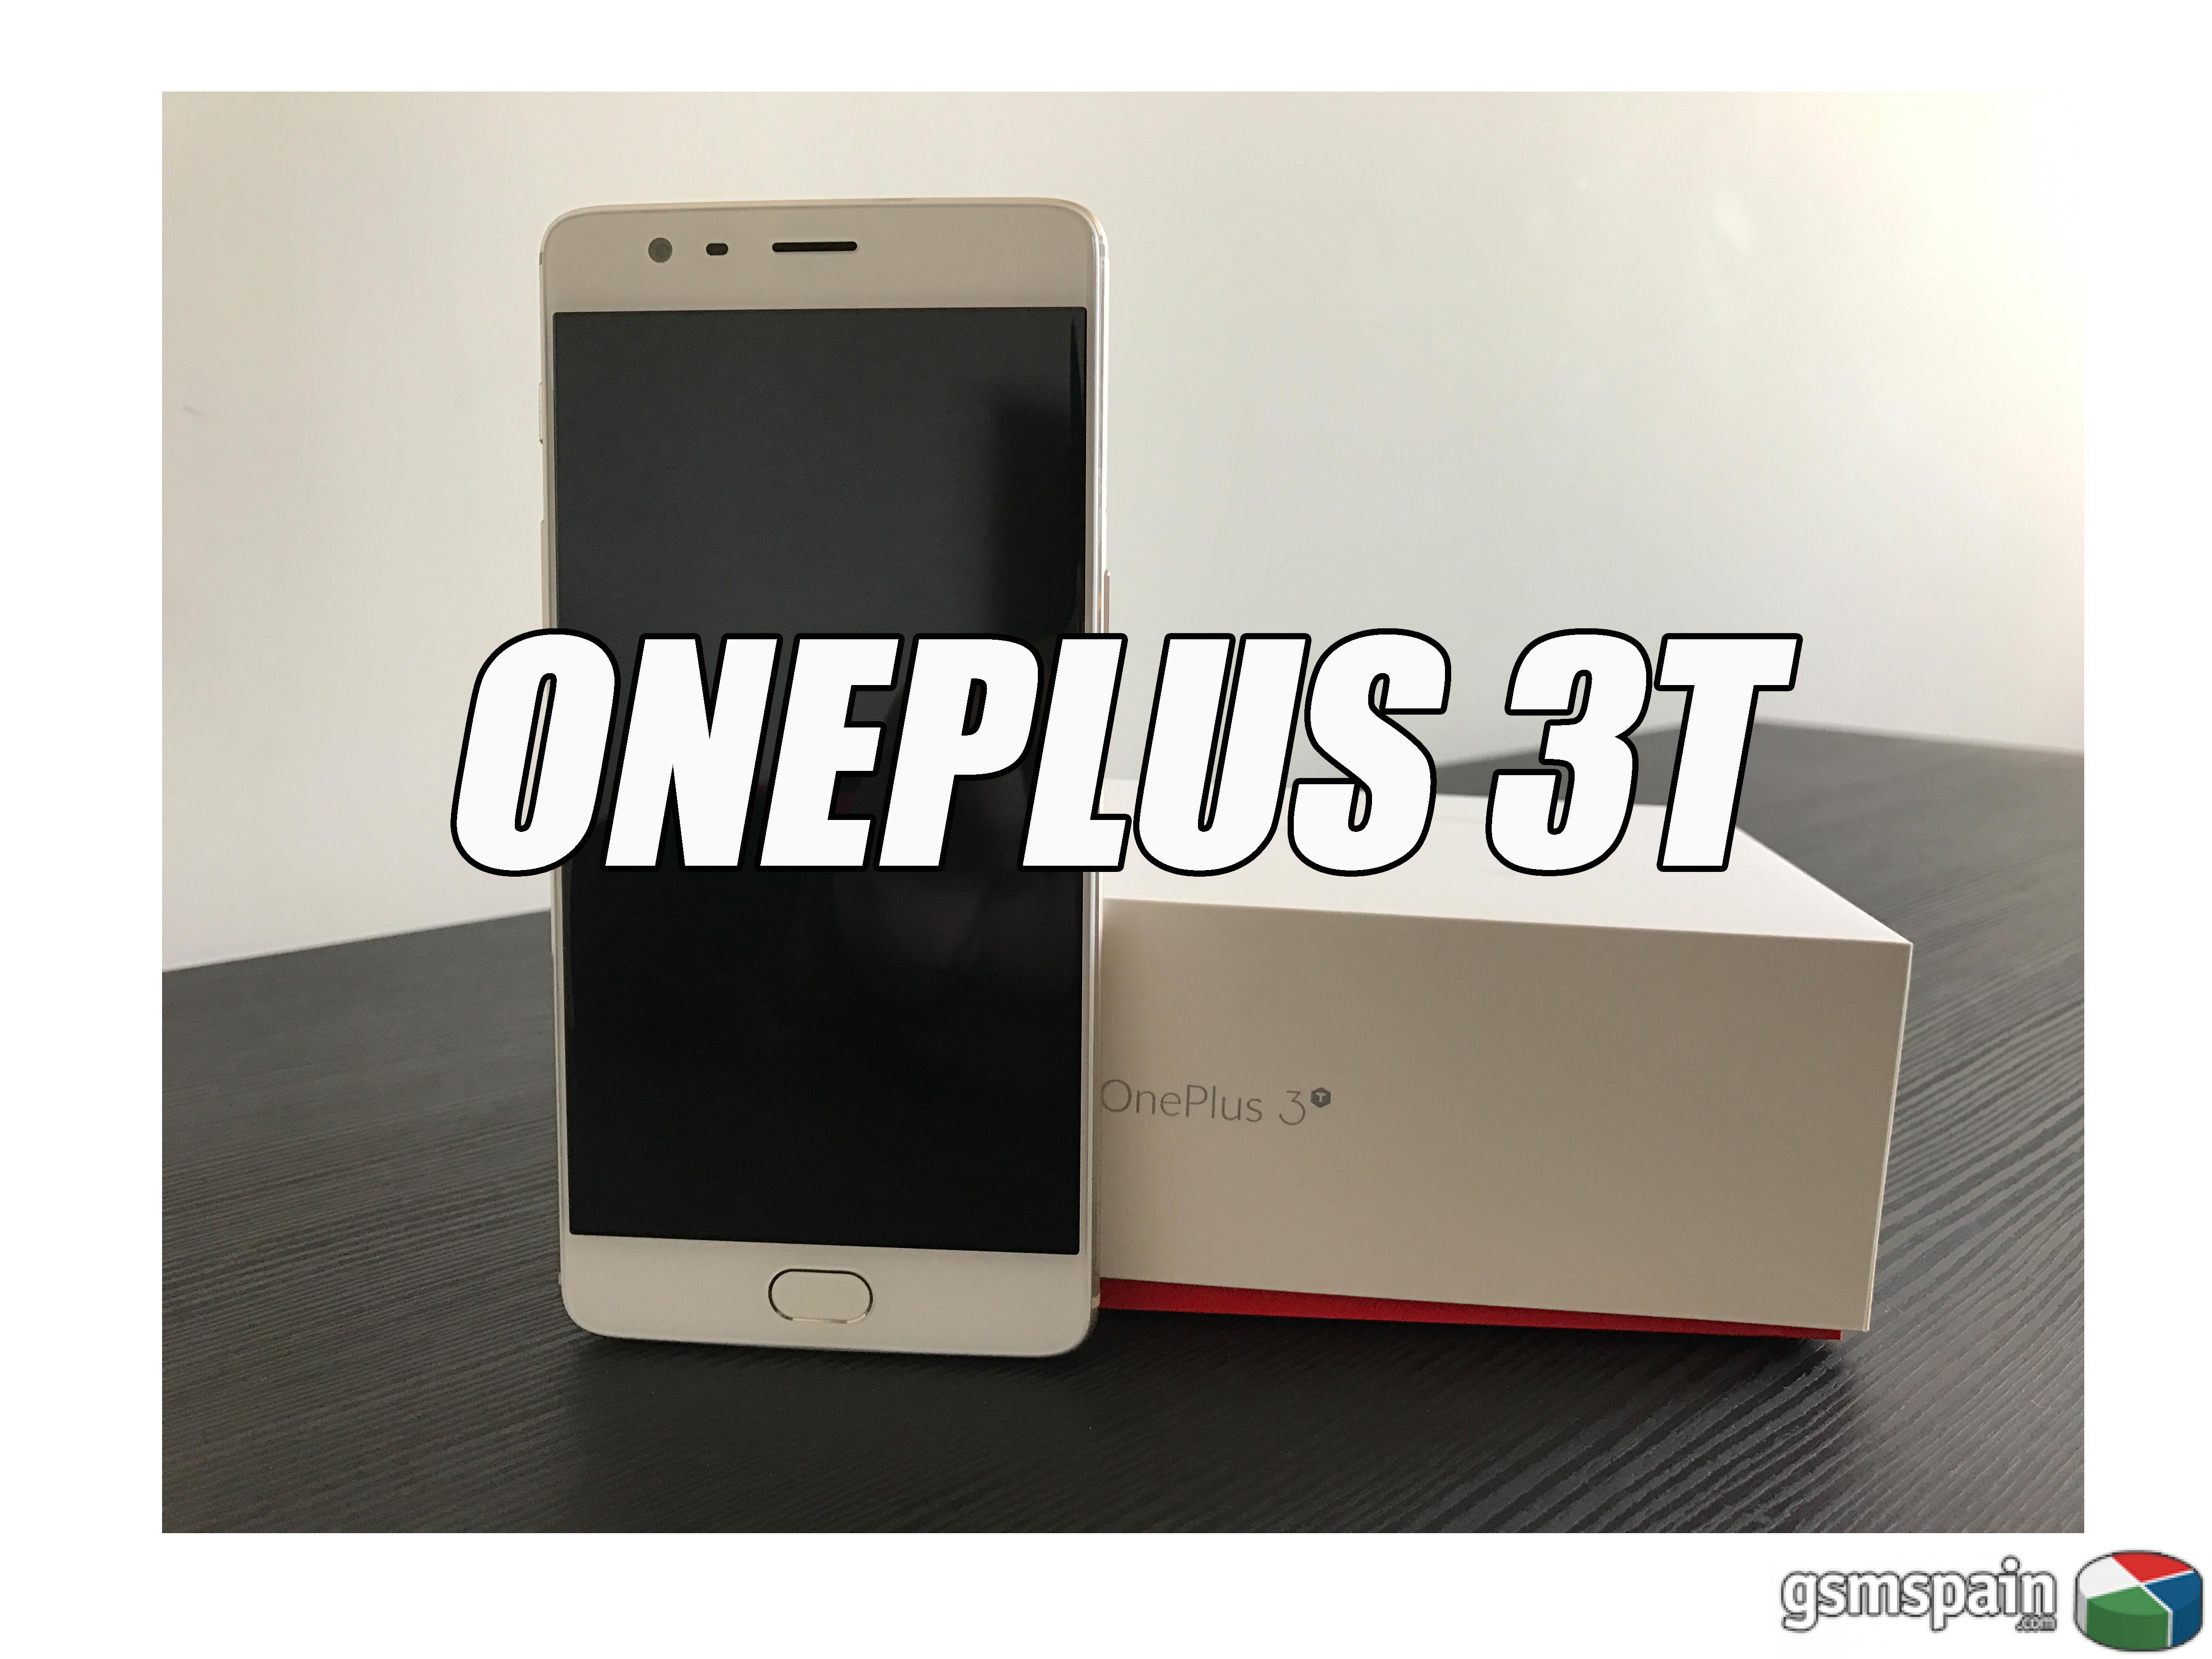 [REVIEW] ONEPLUS 3T SOFT GOLD - BLANCO Y DORADO - Review - Opinion Que es un OnePlus?